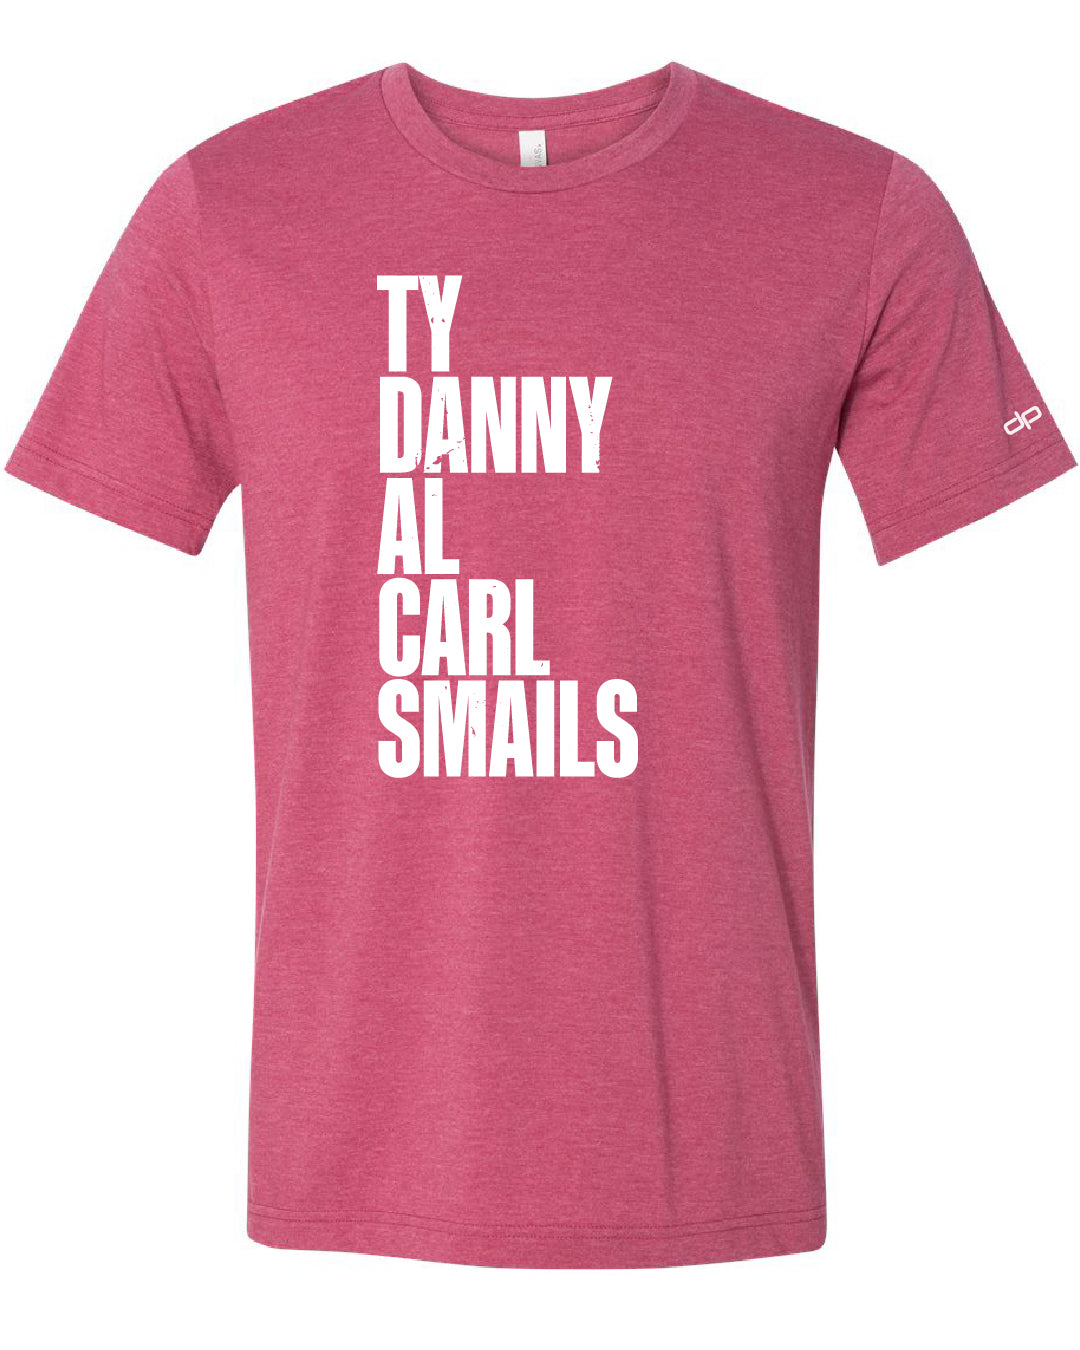 Dannyshack All Timers T-Shirt